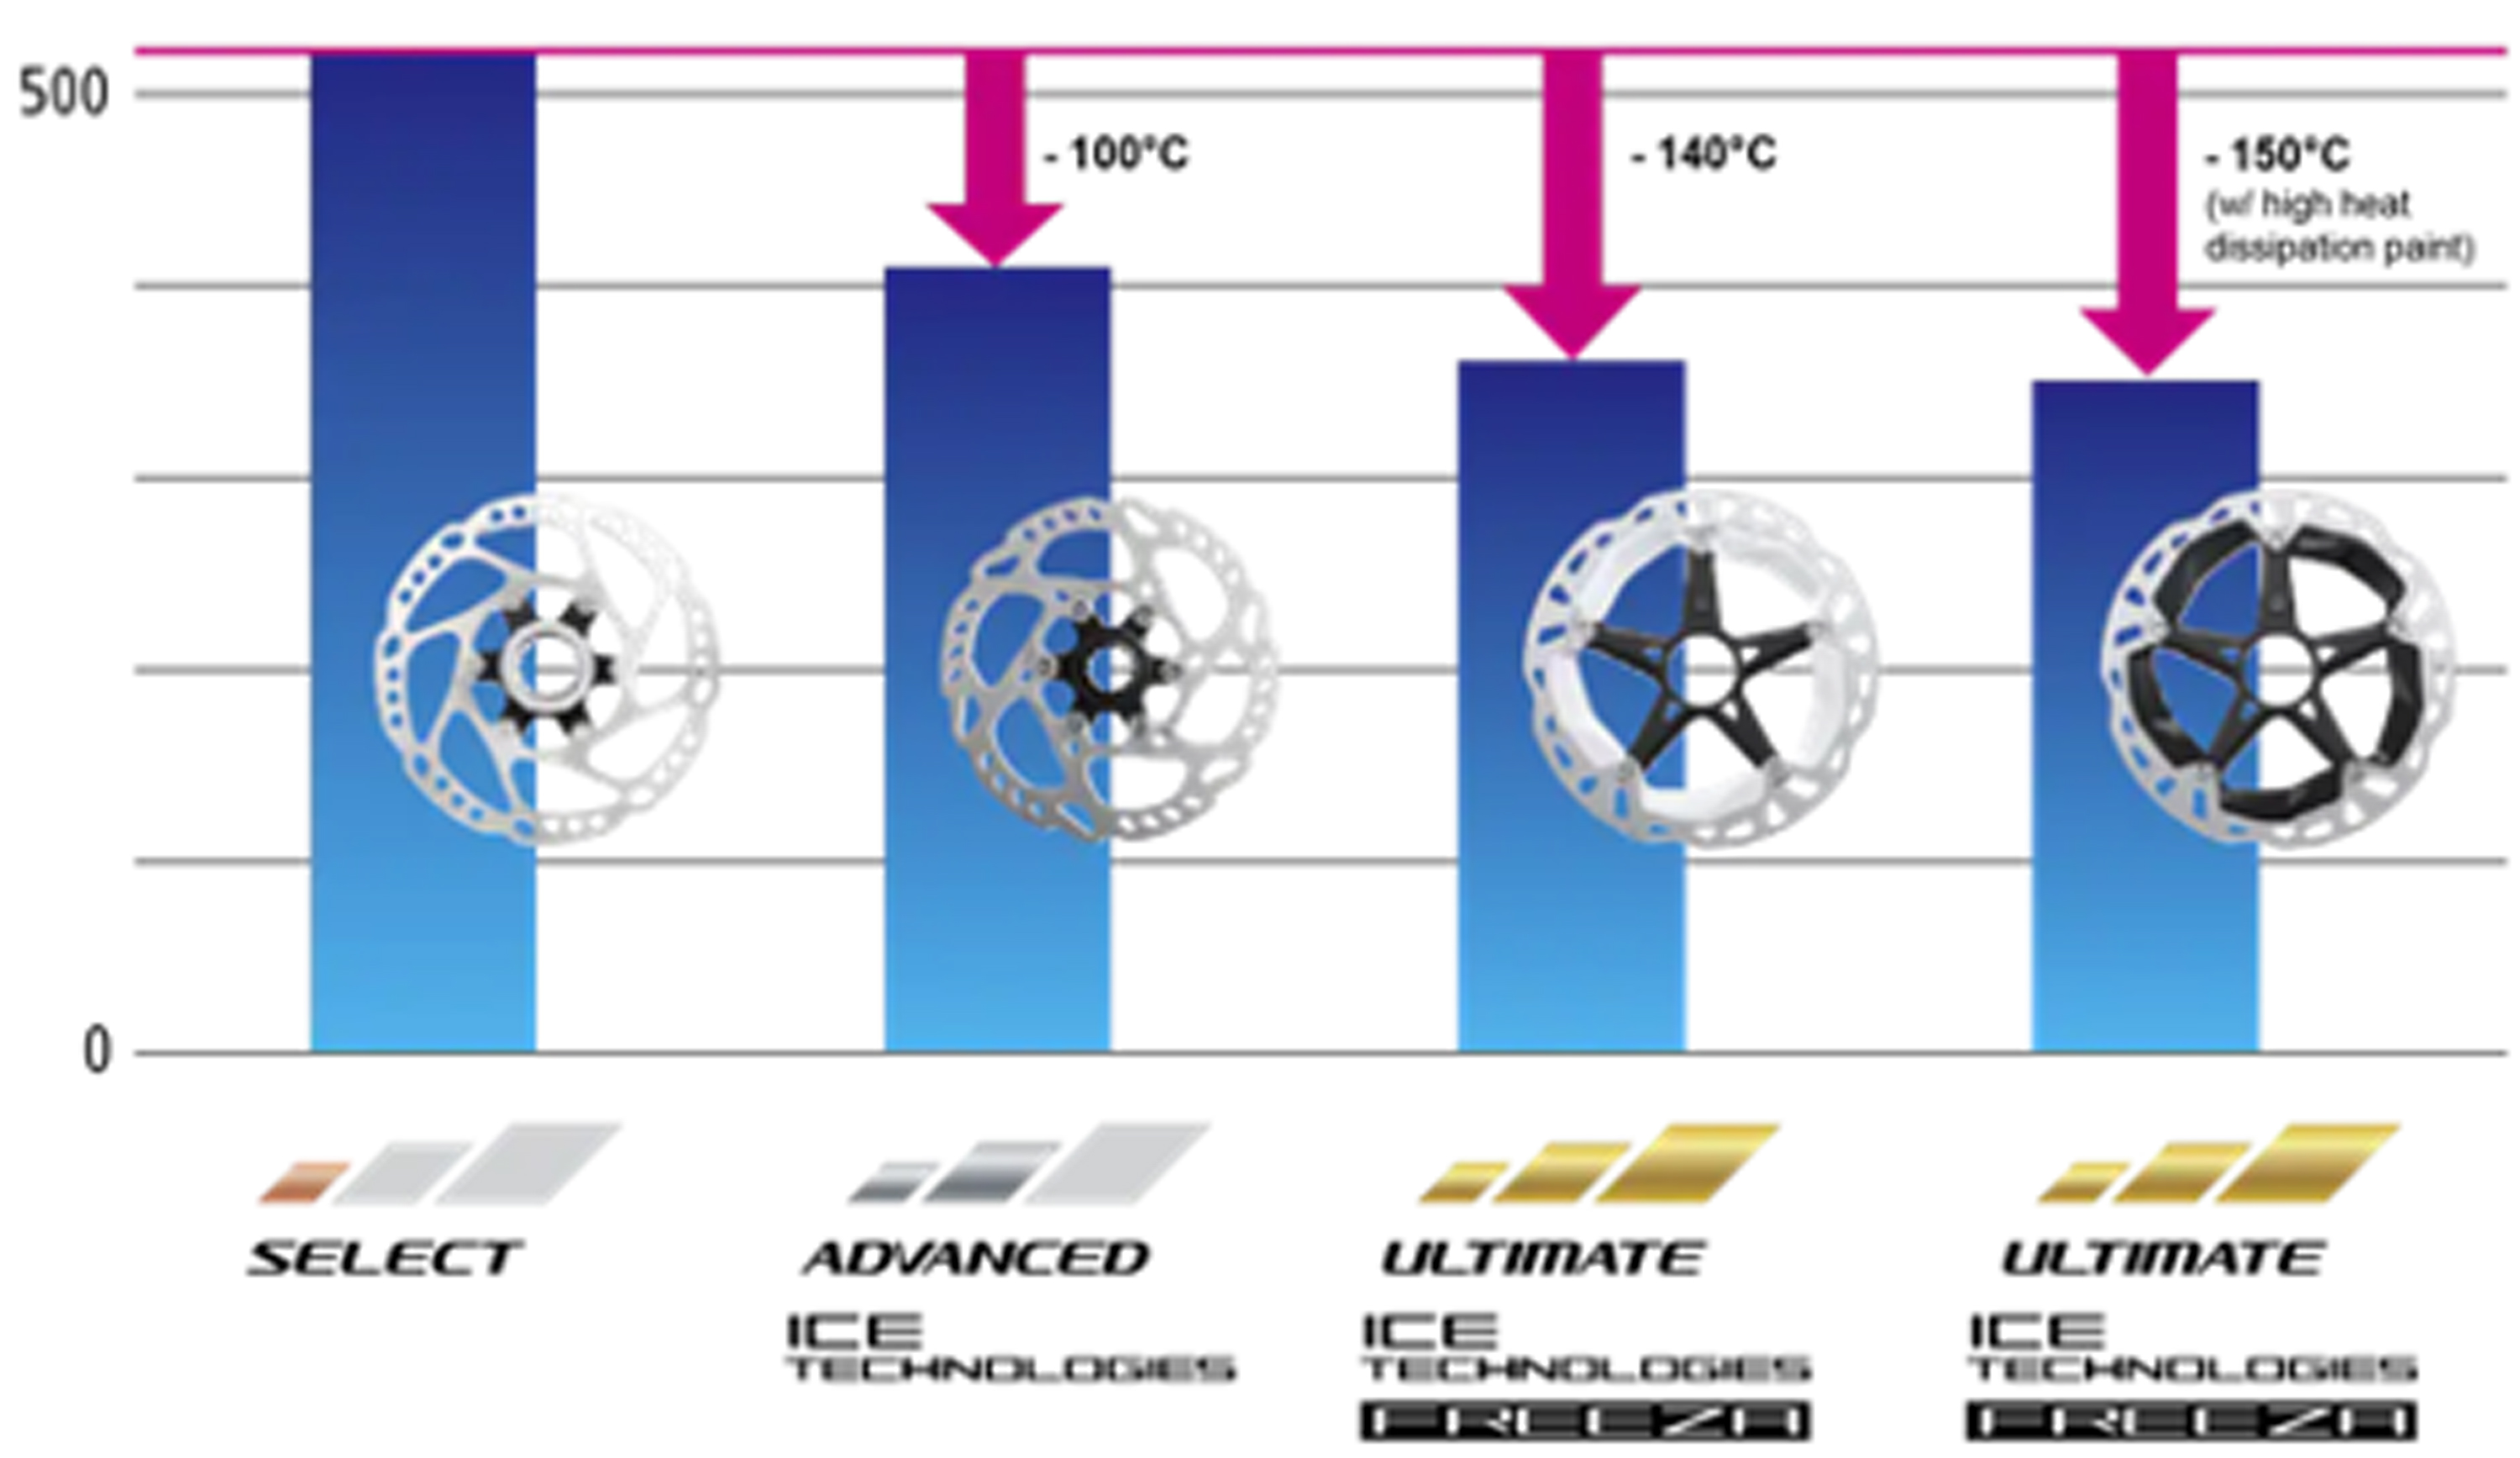 Shimano Ice Tech brake rotors